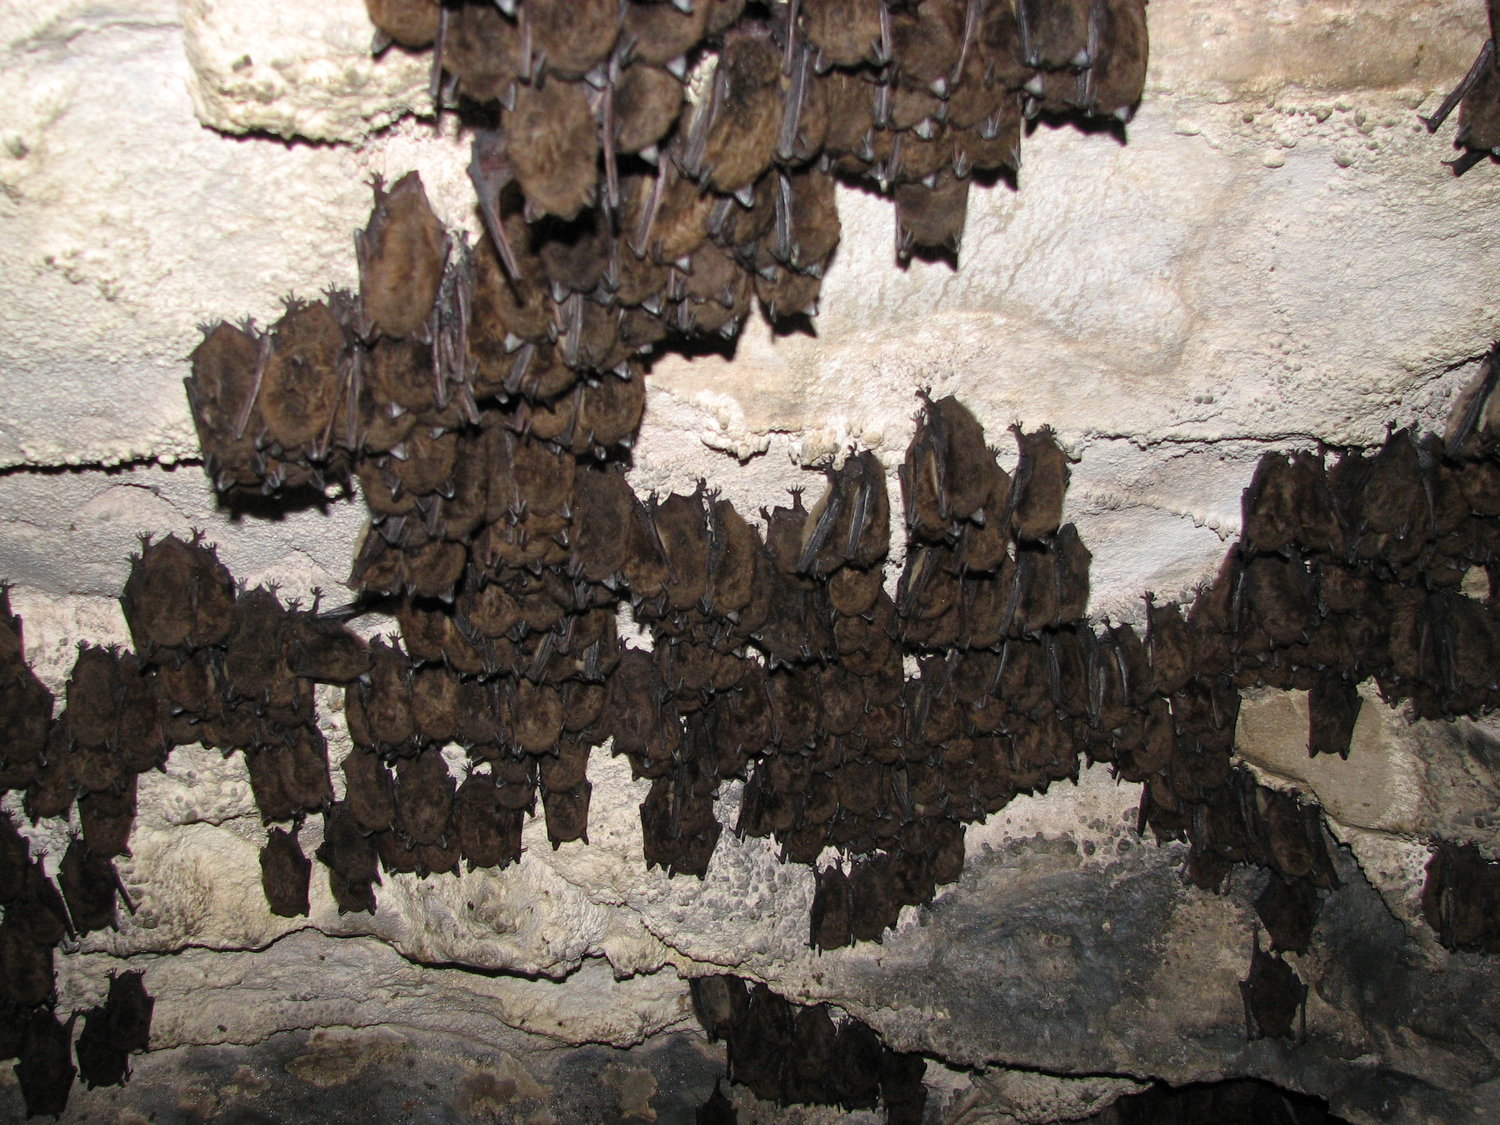 Hibernating bats in a Vermont cave.